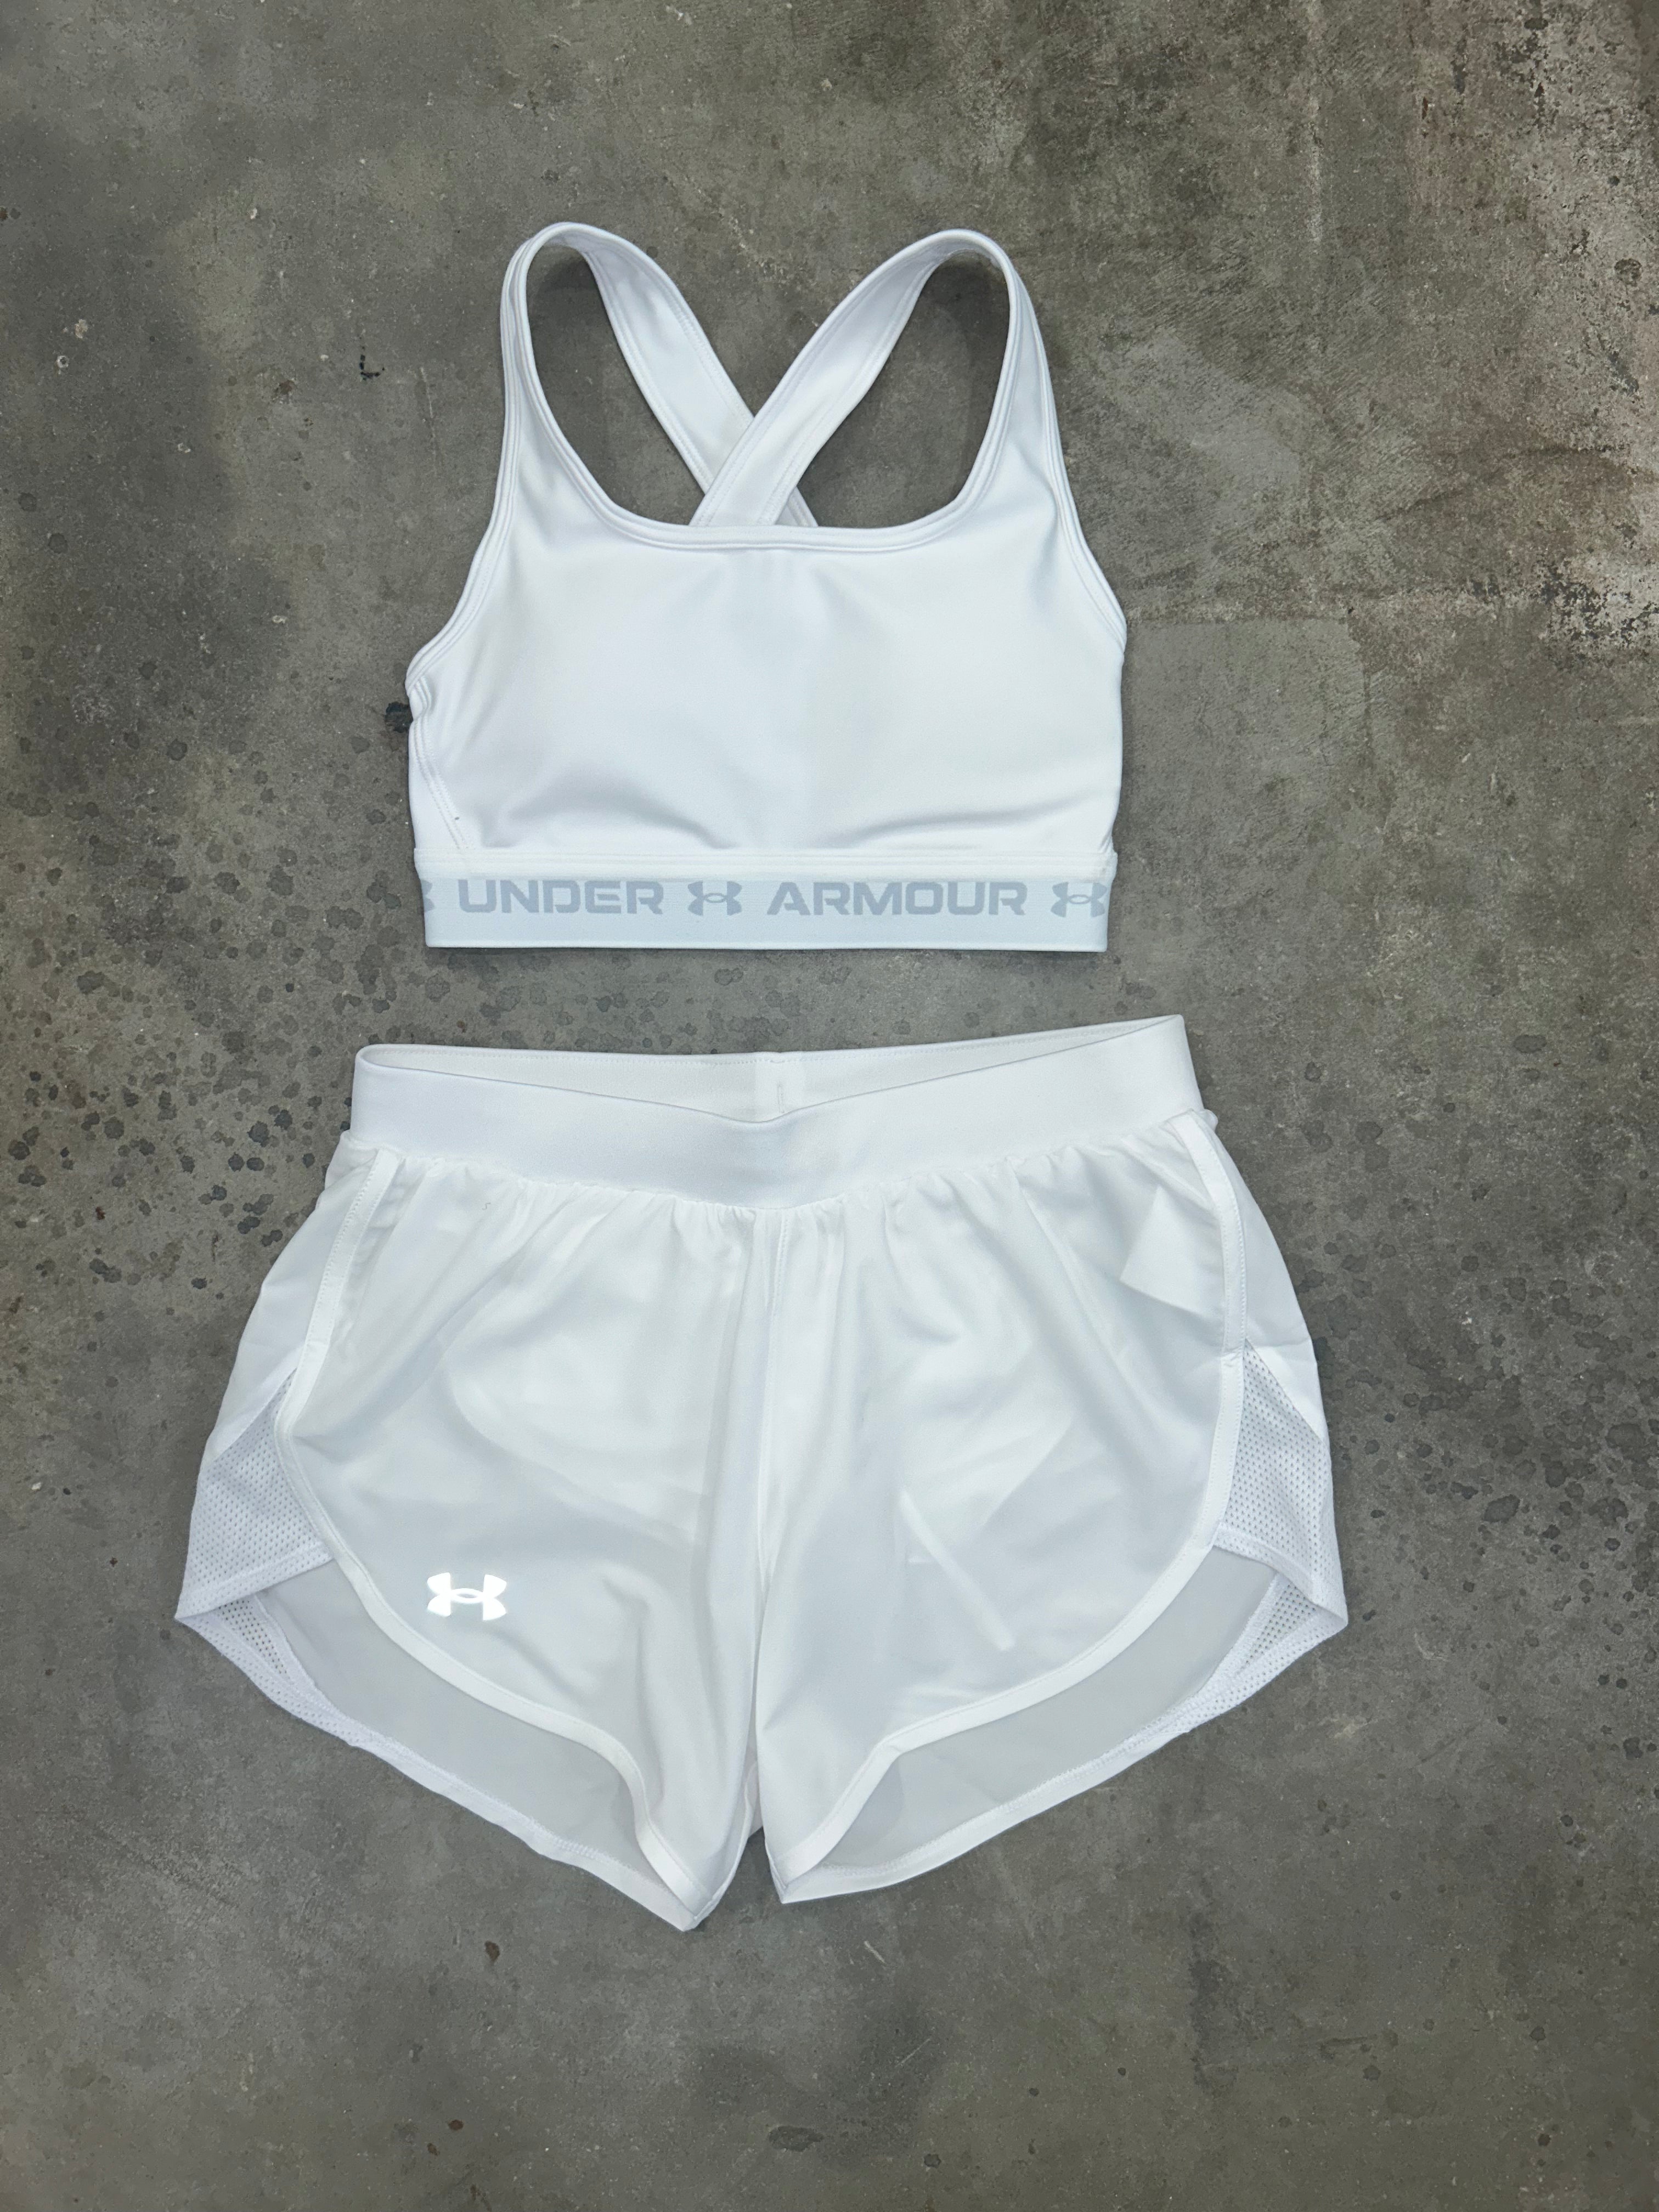 Under Armour Orange Set - Sports Bra / Shorts